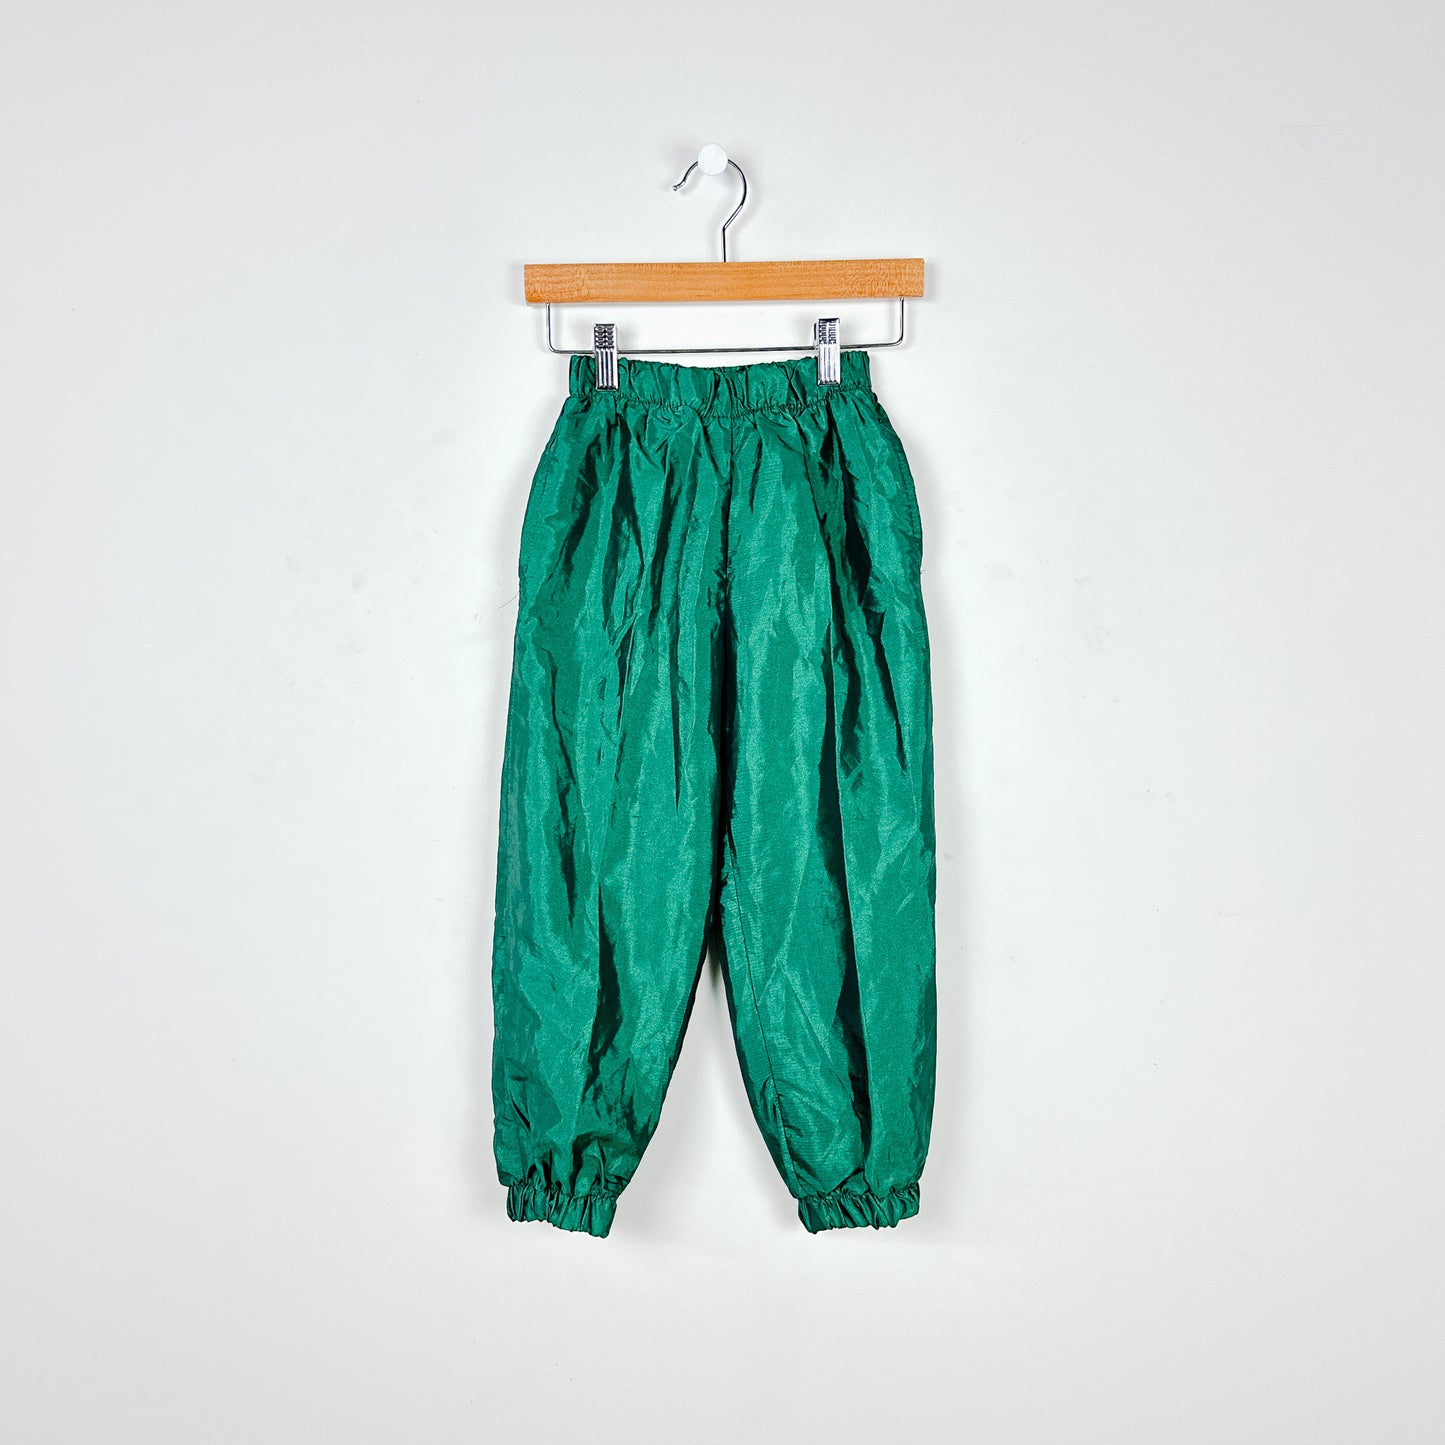 80's Vintage Shiny Green Track Pants - Size 4-5yr